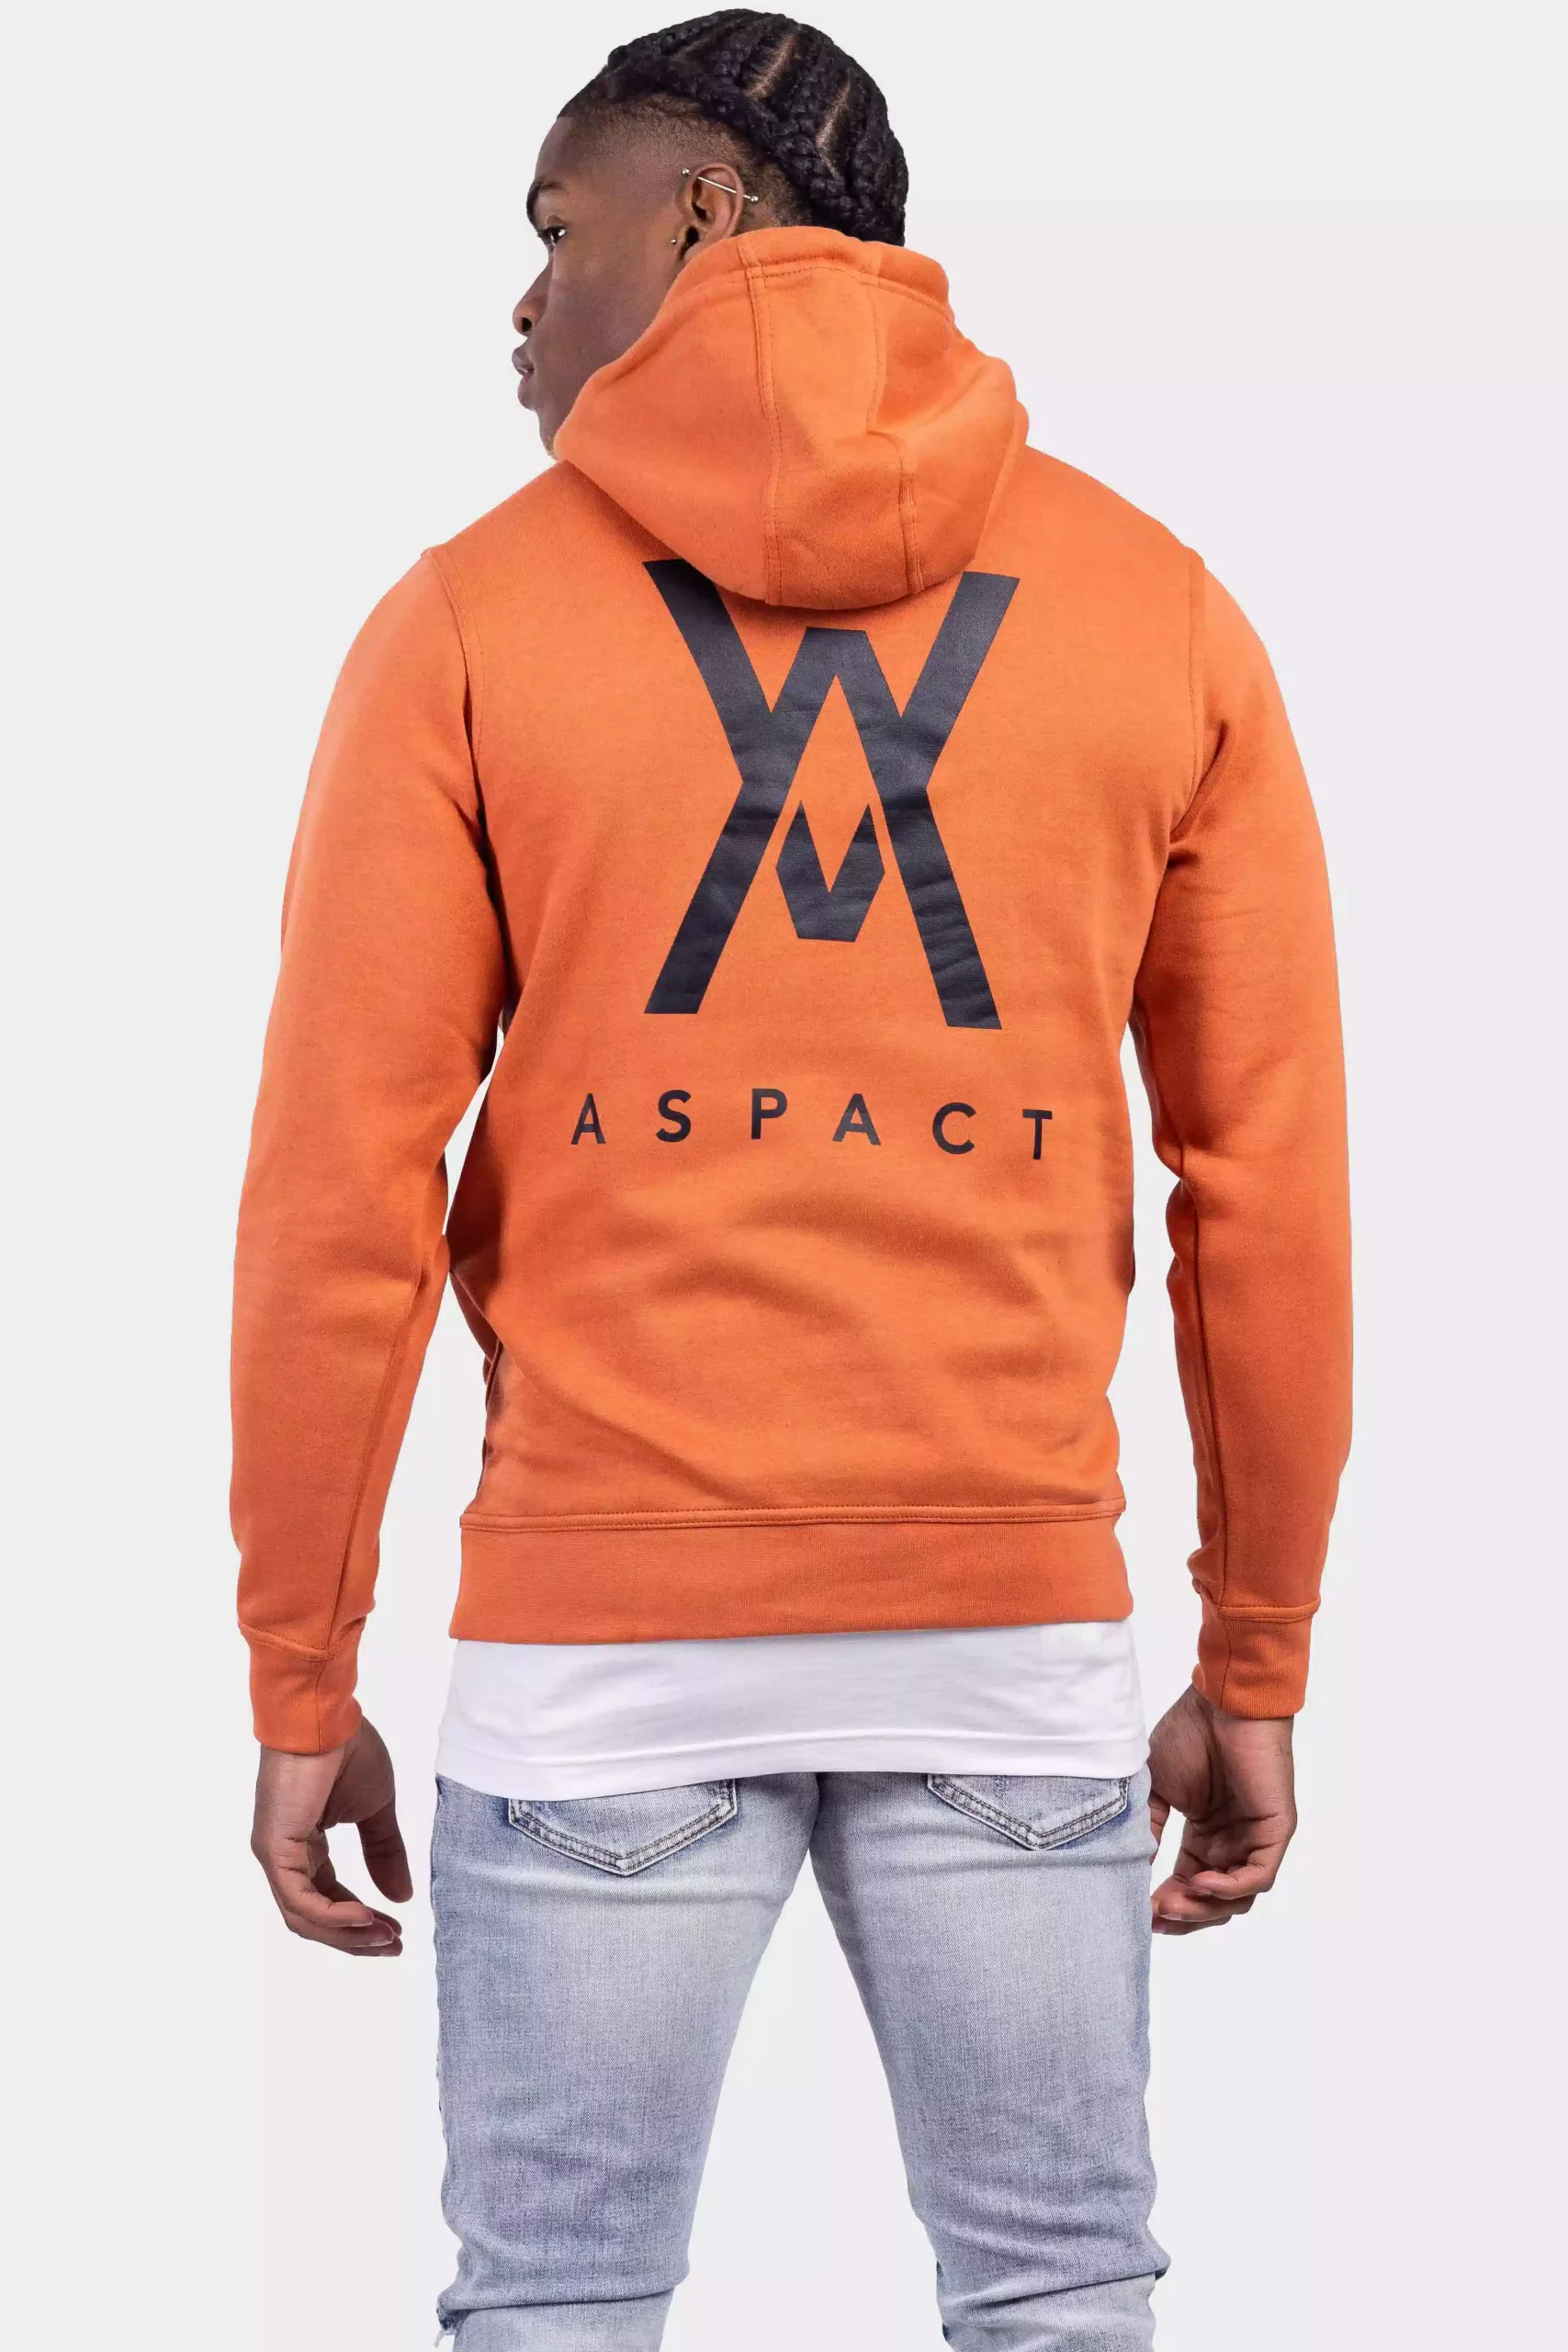 Aspact Back Logo Heren Oranje shoppen? Soccerfanshop